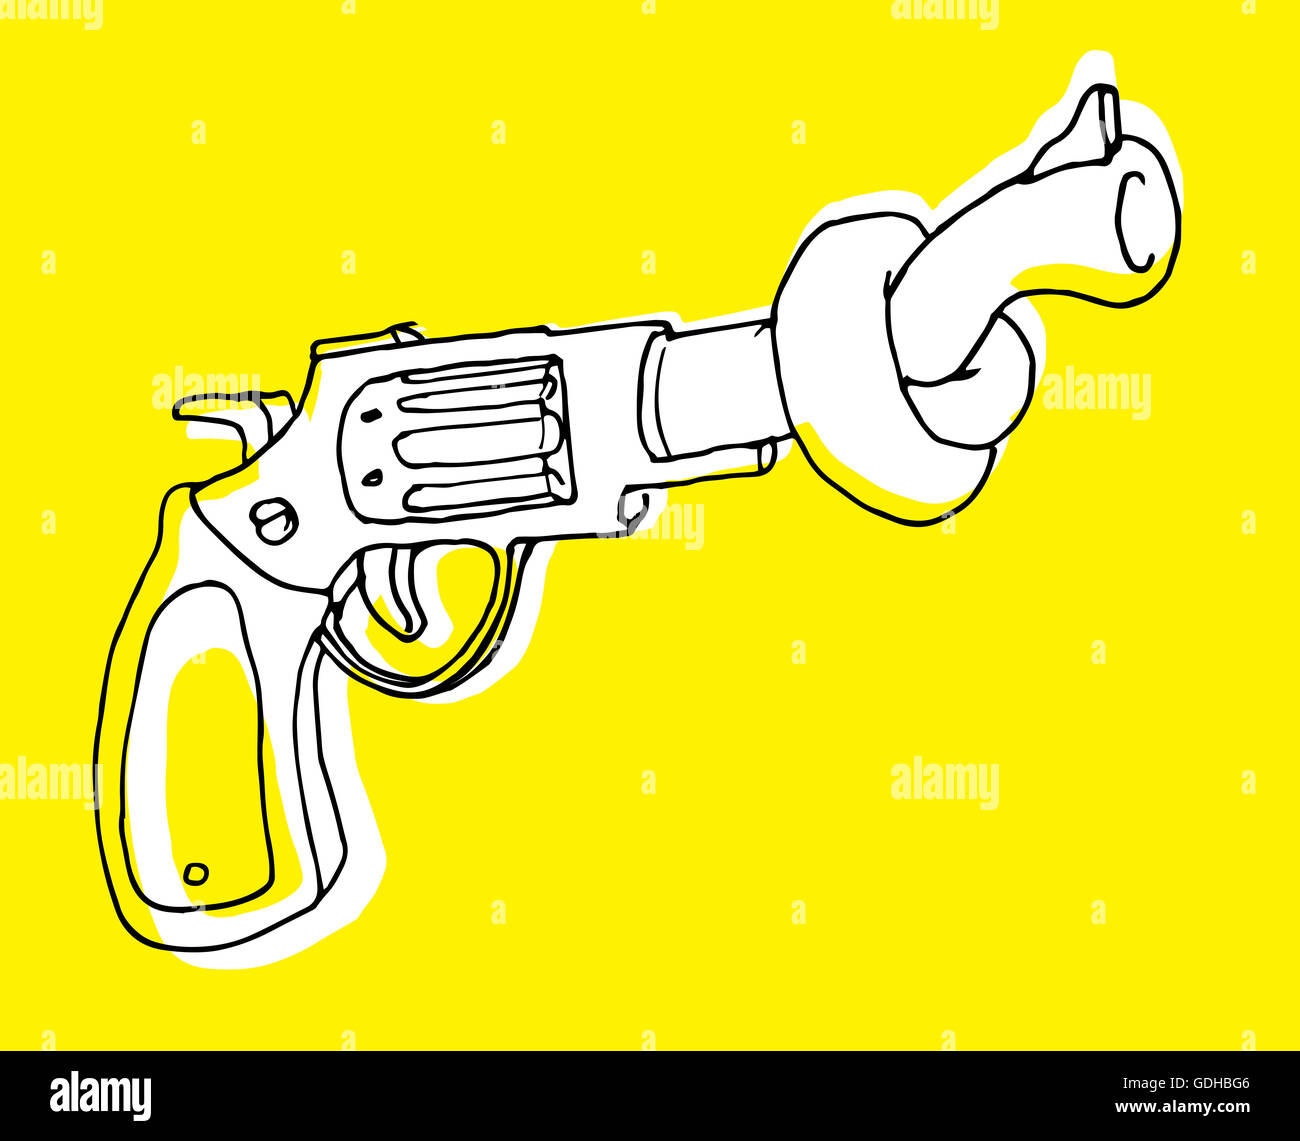 Cartoon illustration of gun control or pistol with tangled barrel Stock Photo